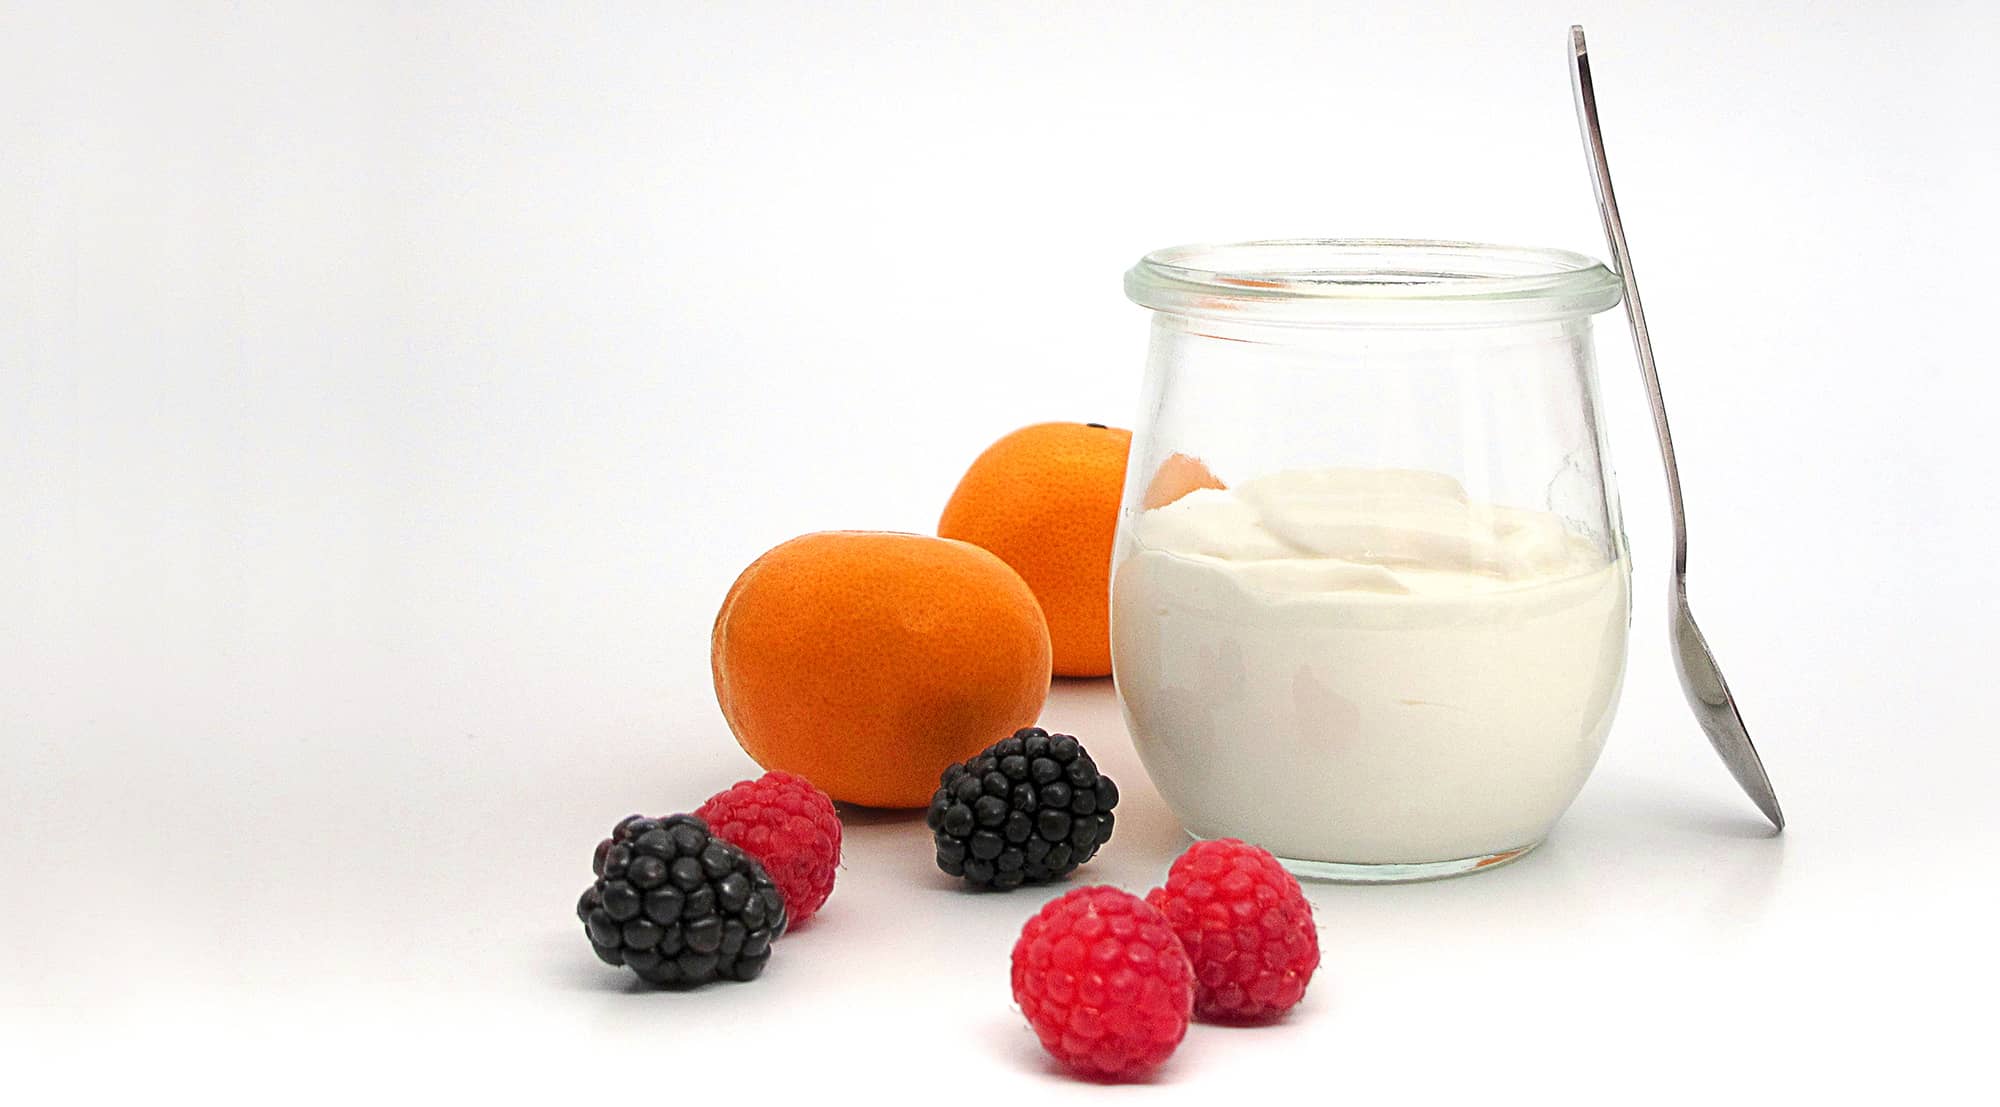 Classic-style yogurt with fruit